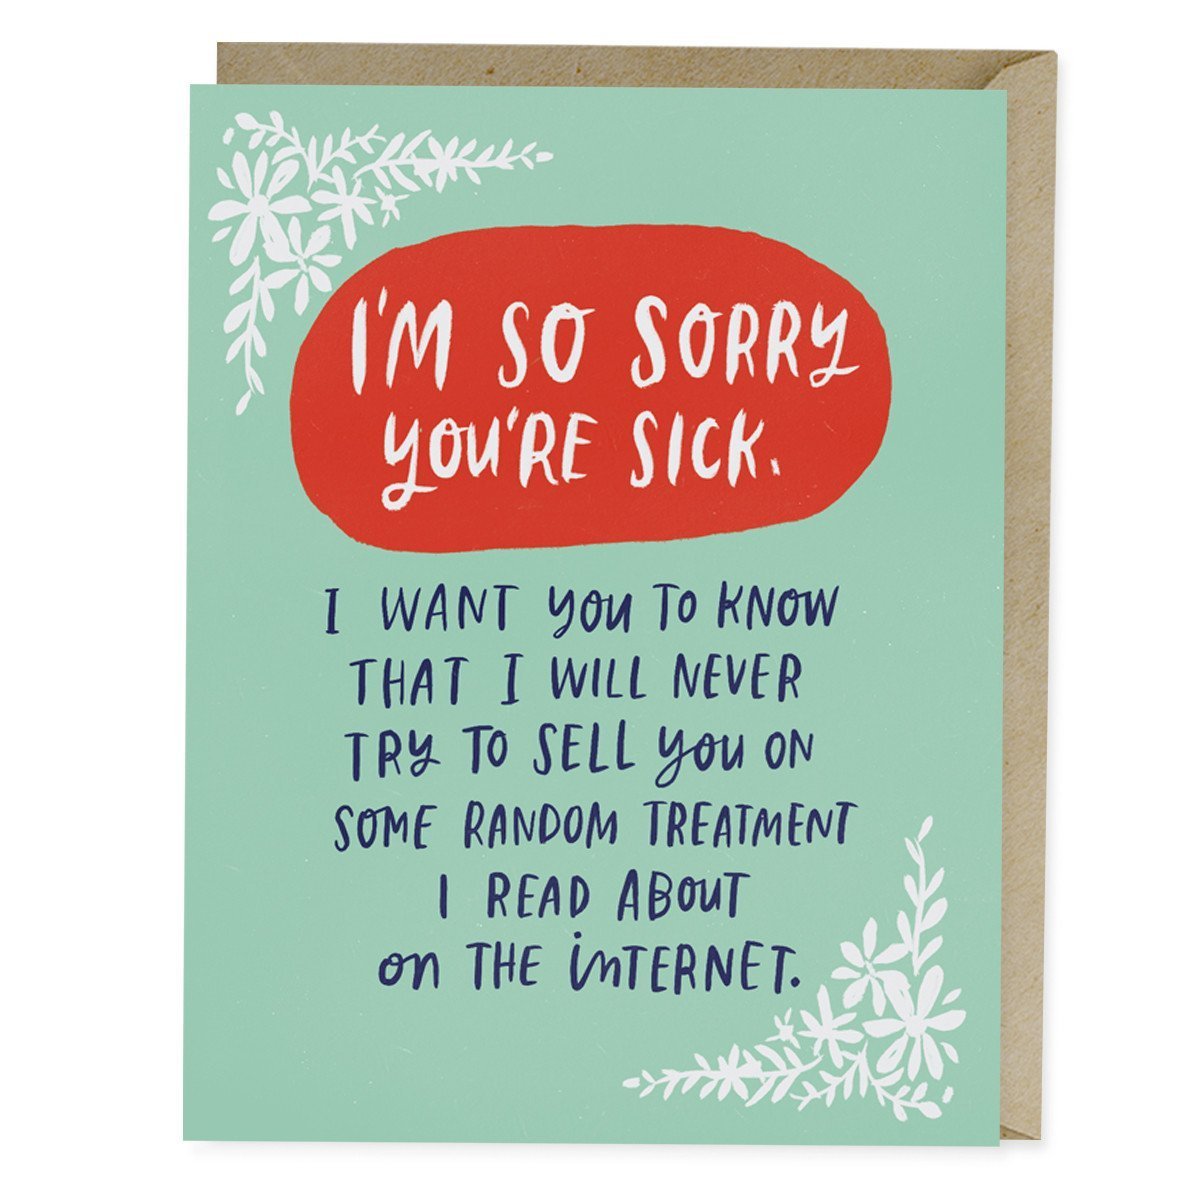 Random Treatment on the Internet Greeting Card